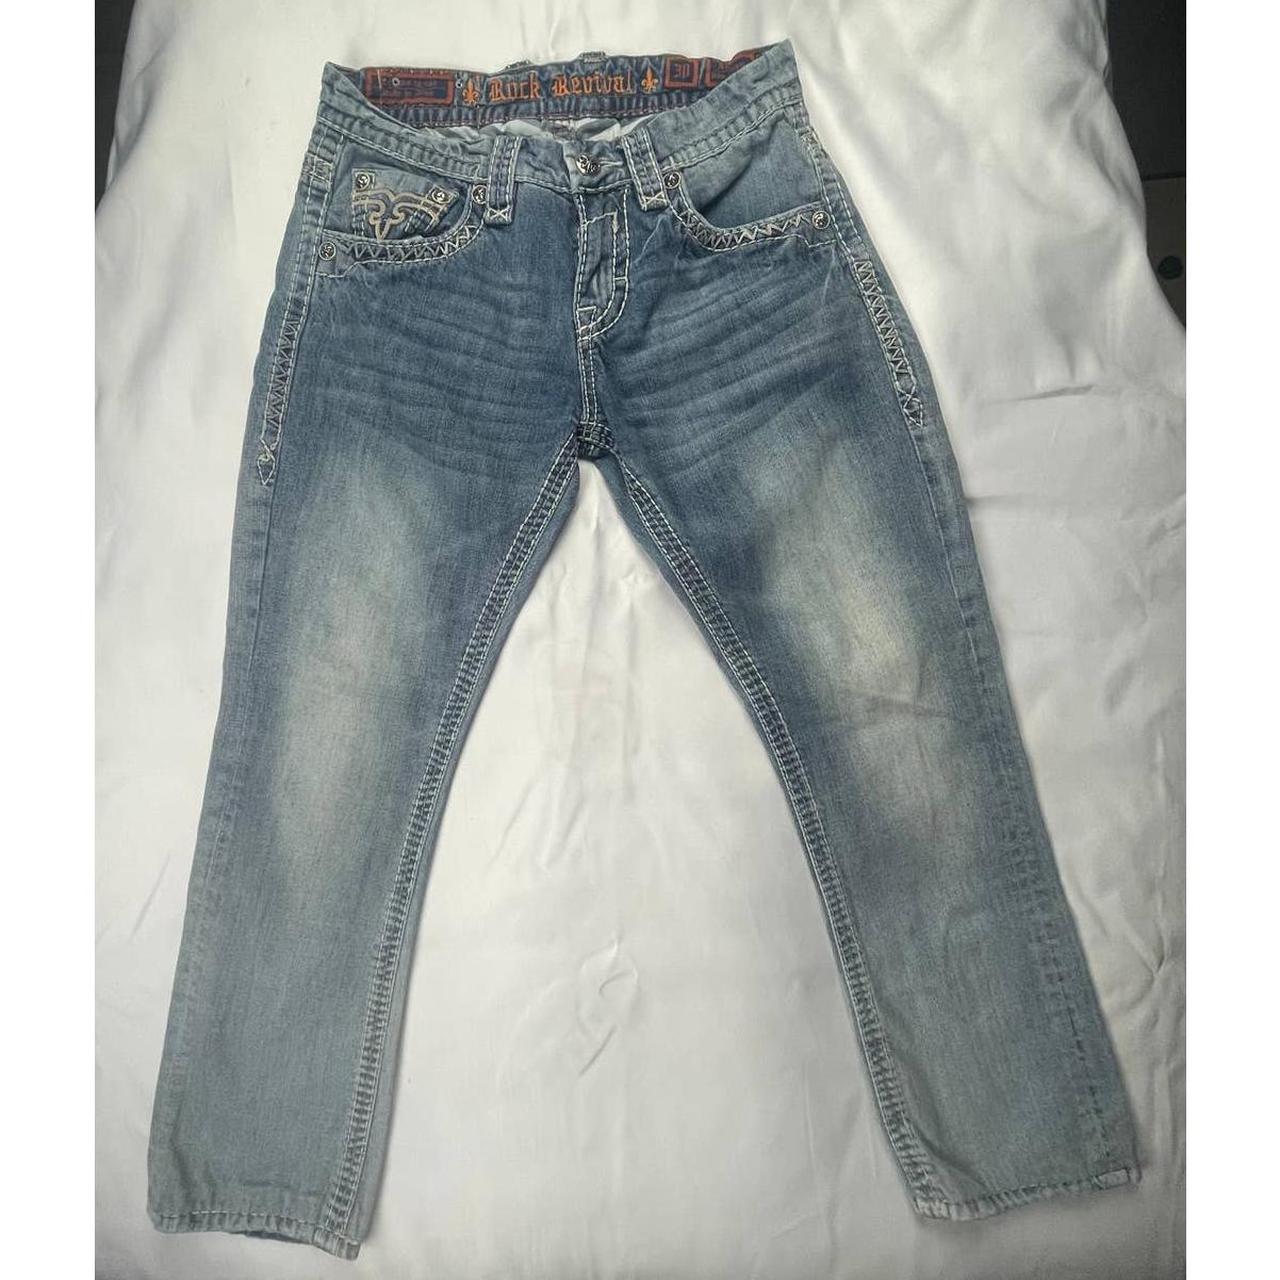 Men's Rock Revivals Jeans Straight Slim Size 30... - Depop